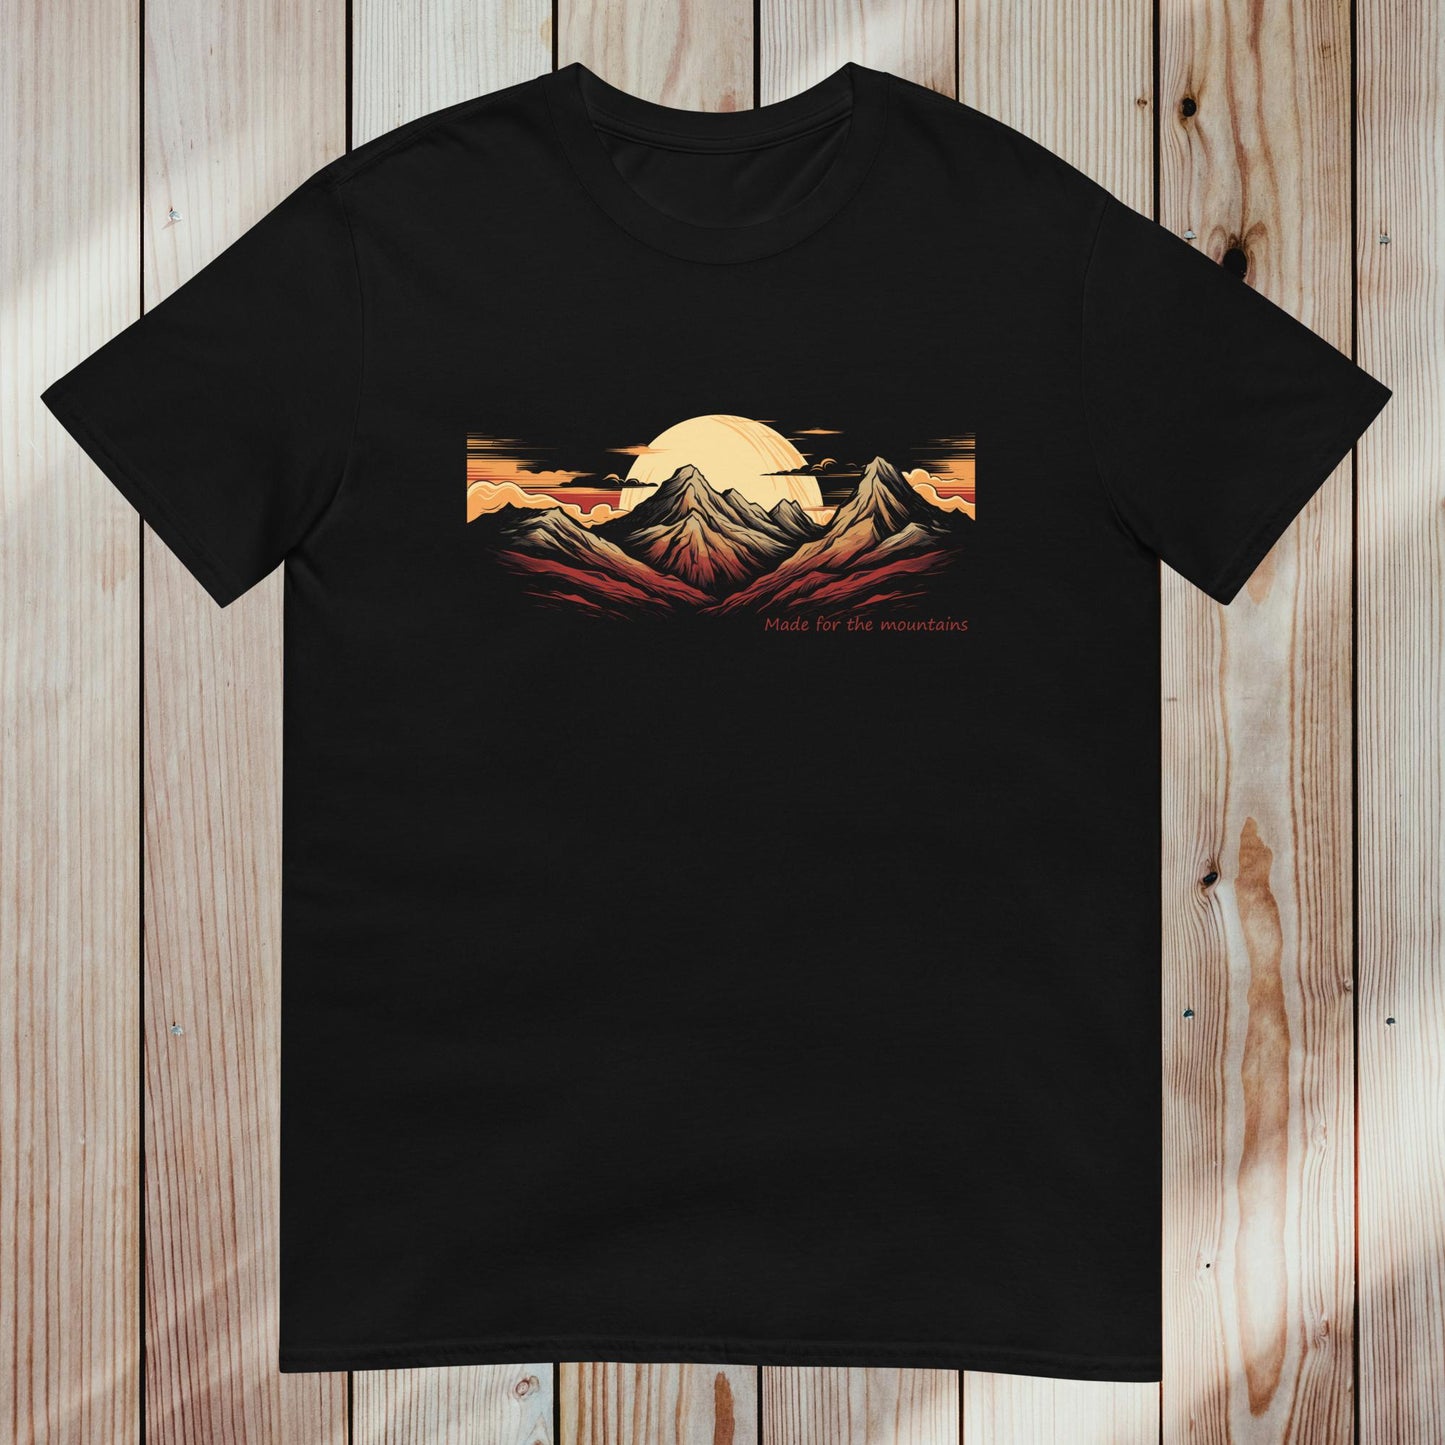 Unisex marškinėliai: "Made for the mountains" 2